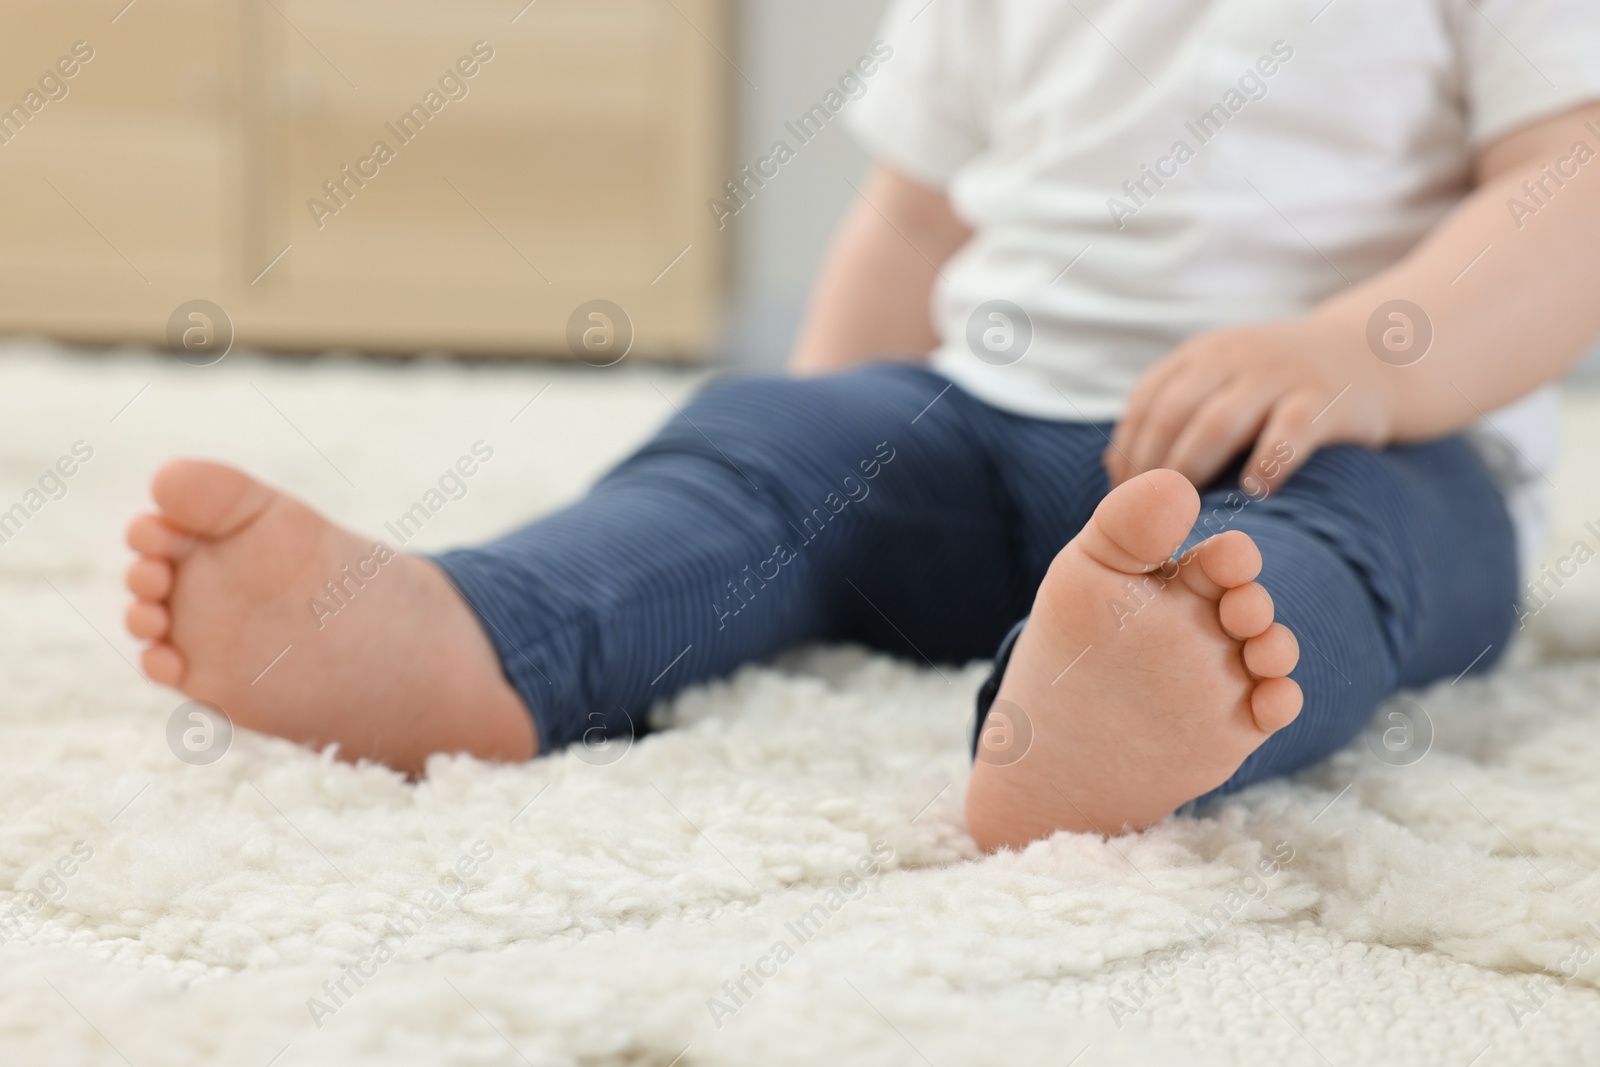 Photo of Baby sitting on soft carpet indoors, closeup